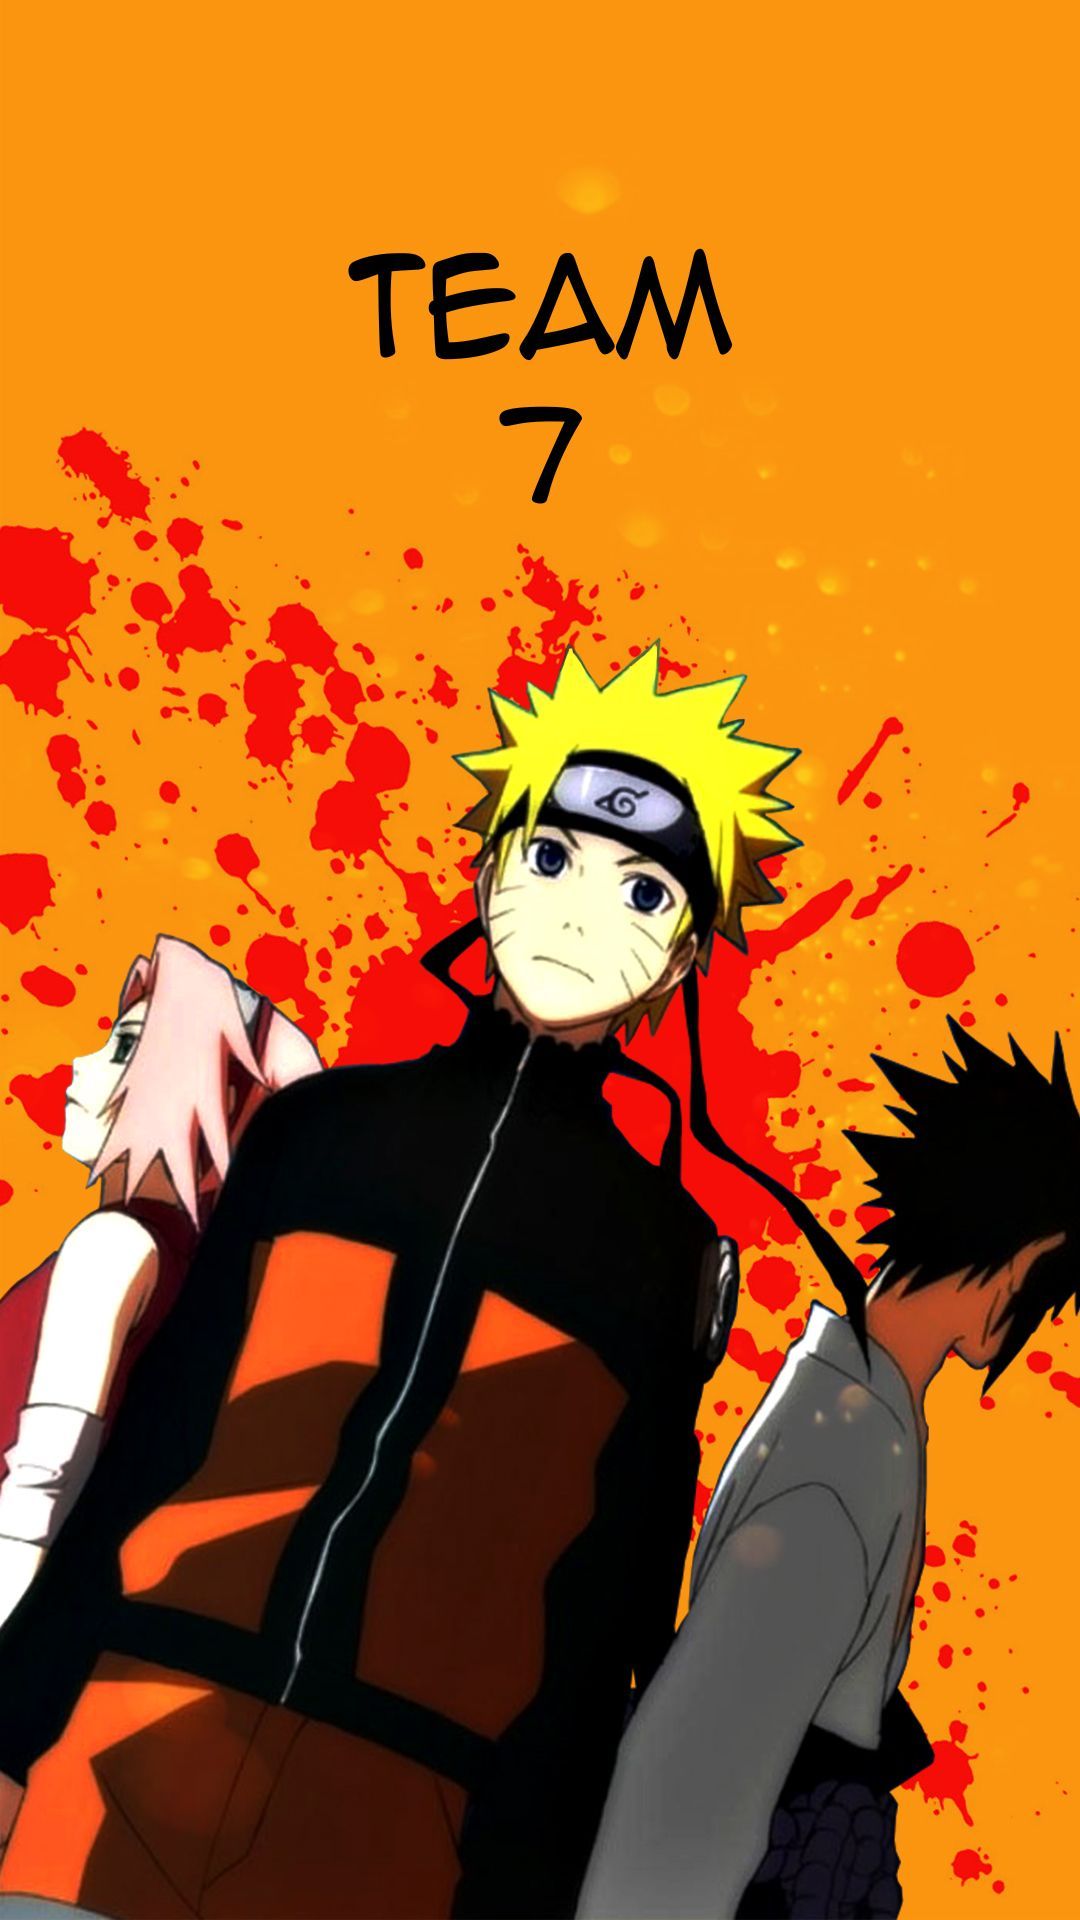 Team 7. Naruto Shippuden. Anime Wallpaper #anime #wallpaper